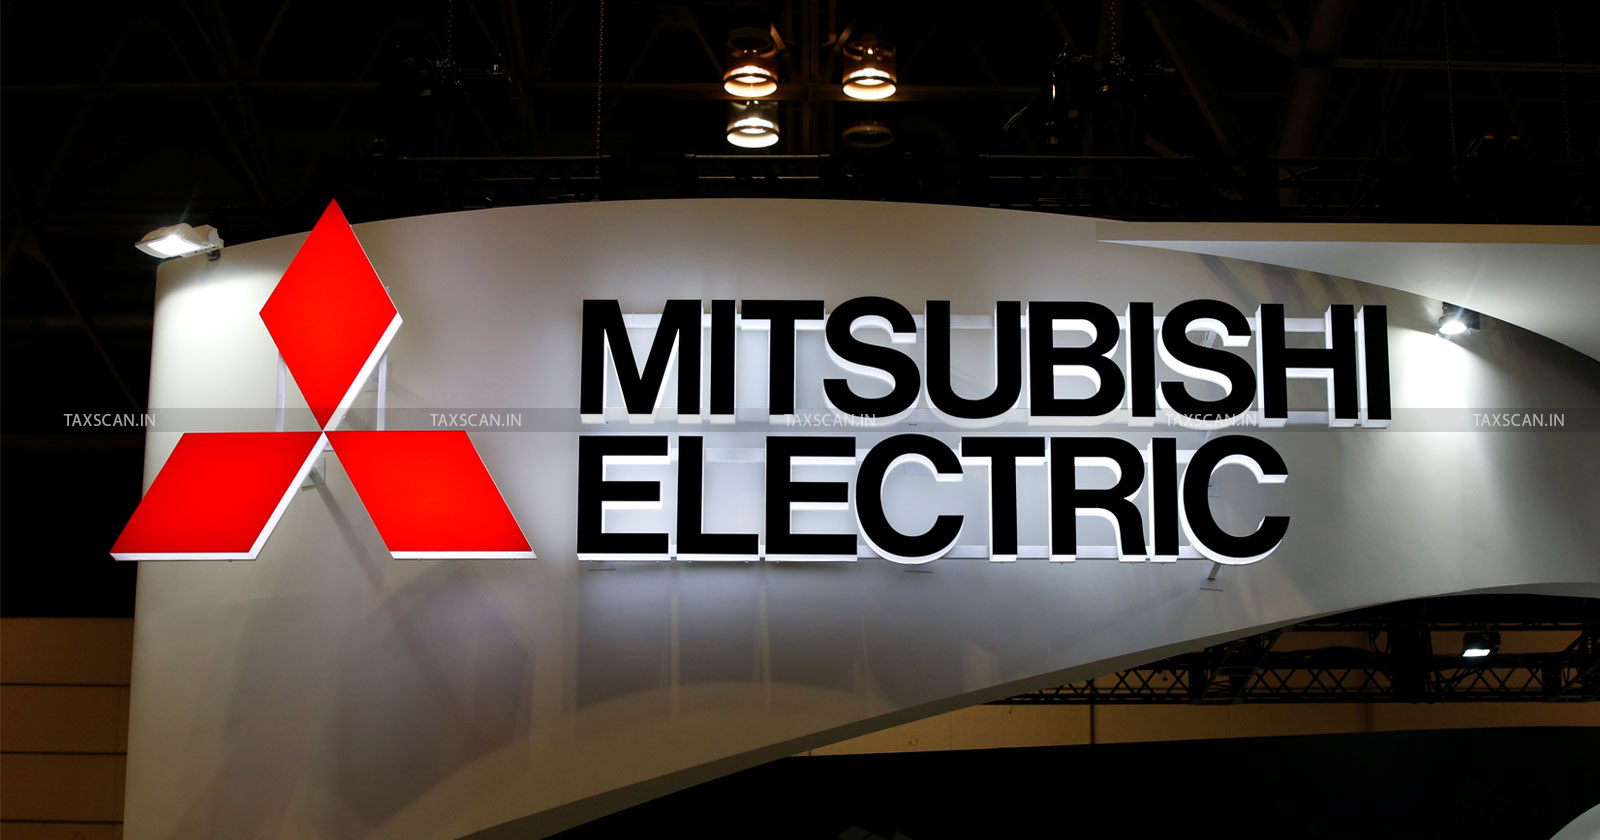 Mitsubishi Electric India - Customs Department - Supreme Court - TAXSCAN